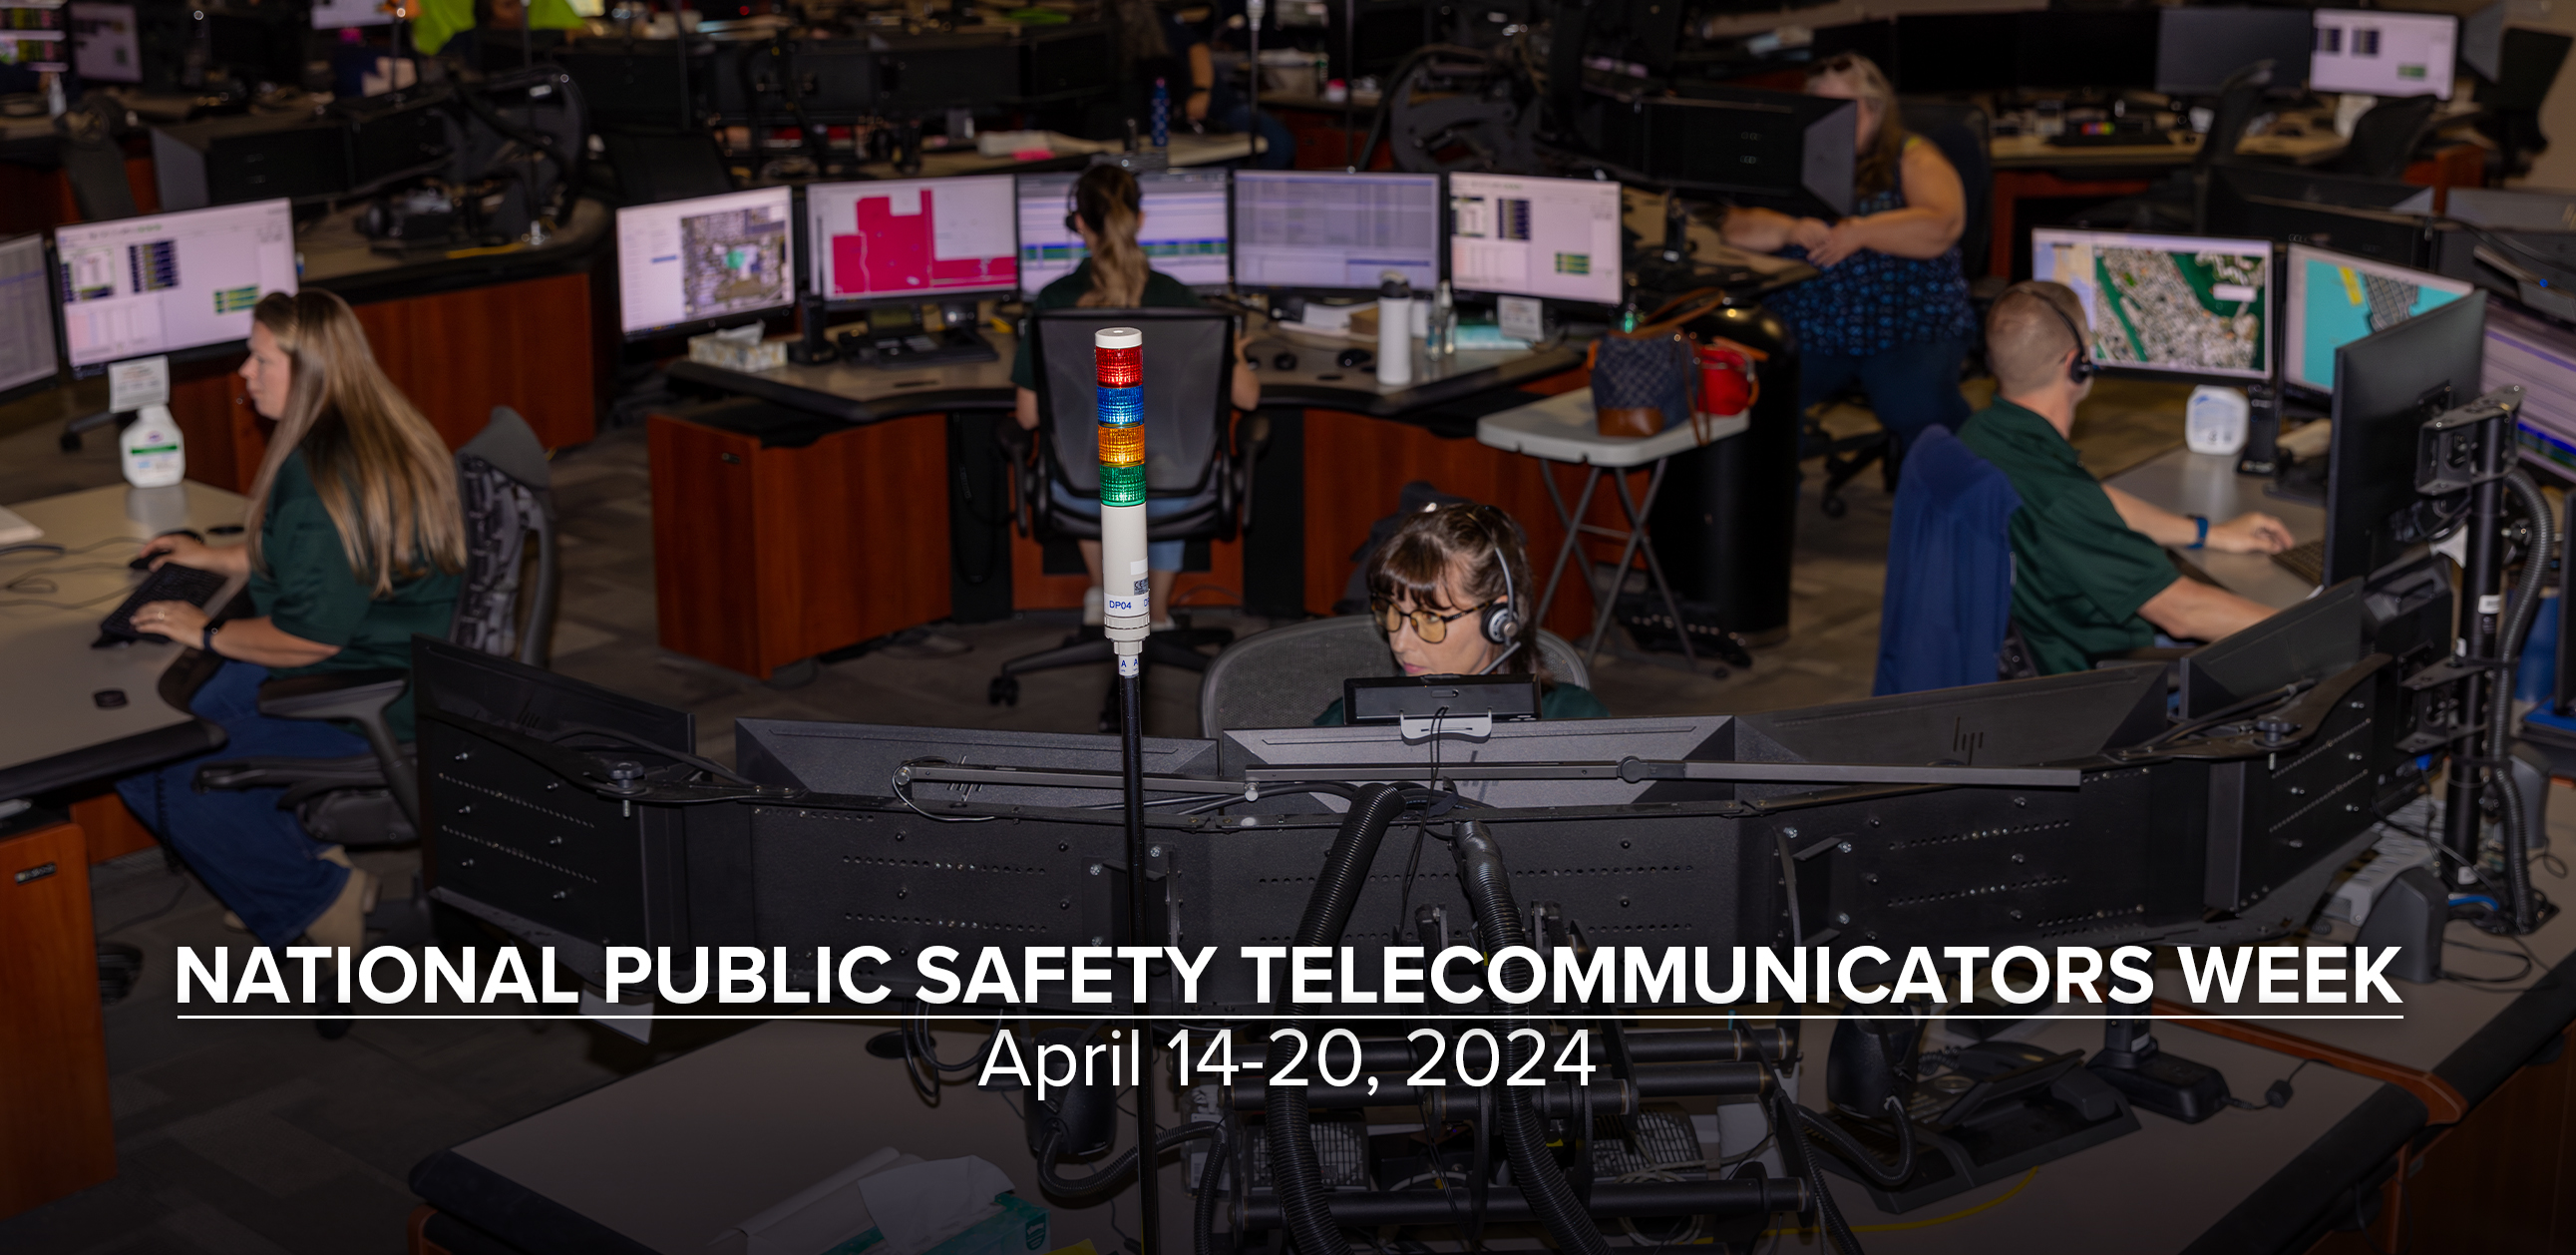 Nation Public Safety Telecommunicator Week, April 14-20